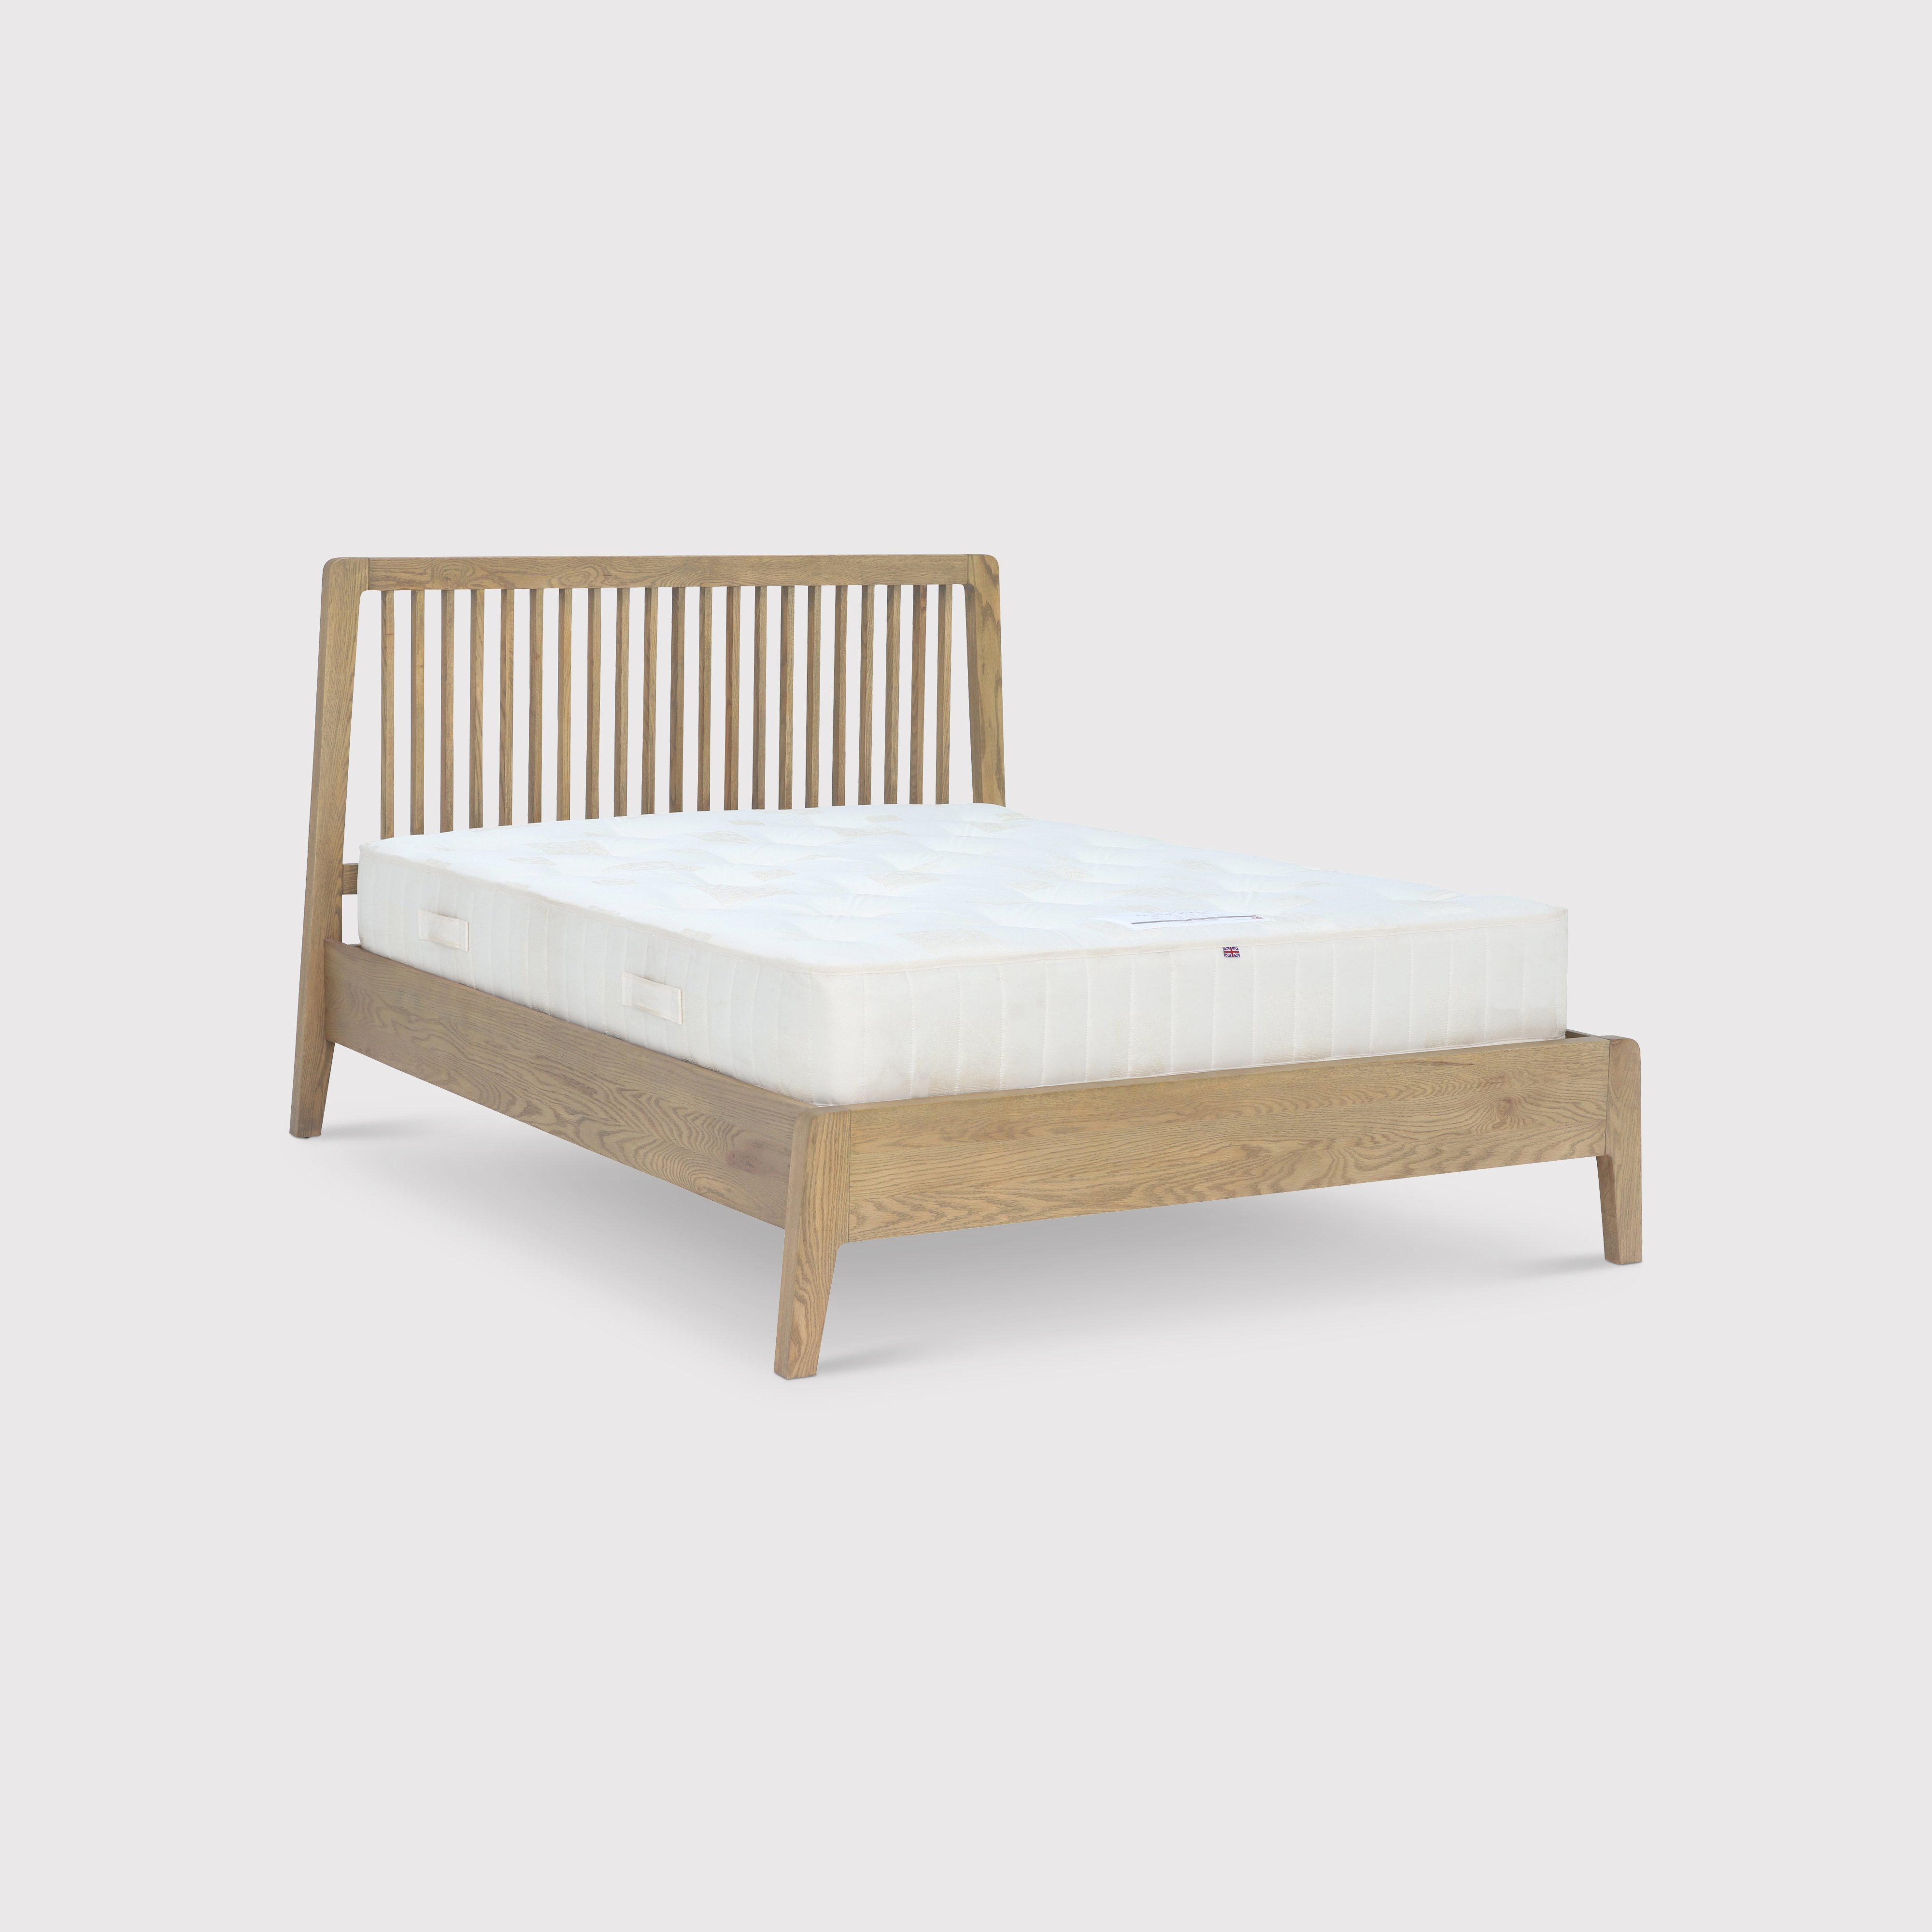 Runswick 150cm Bed Frame, Brown | King | Barker & Stonehouse